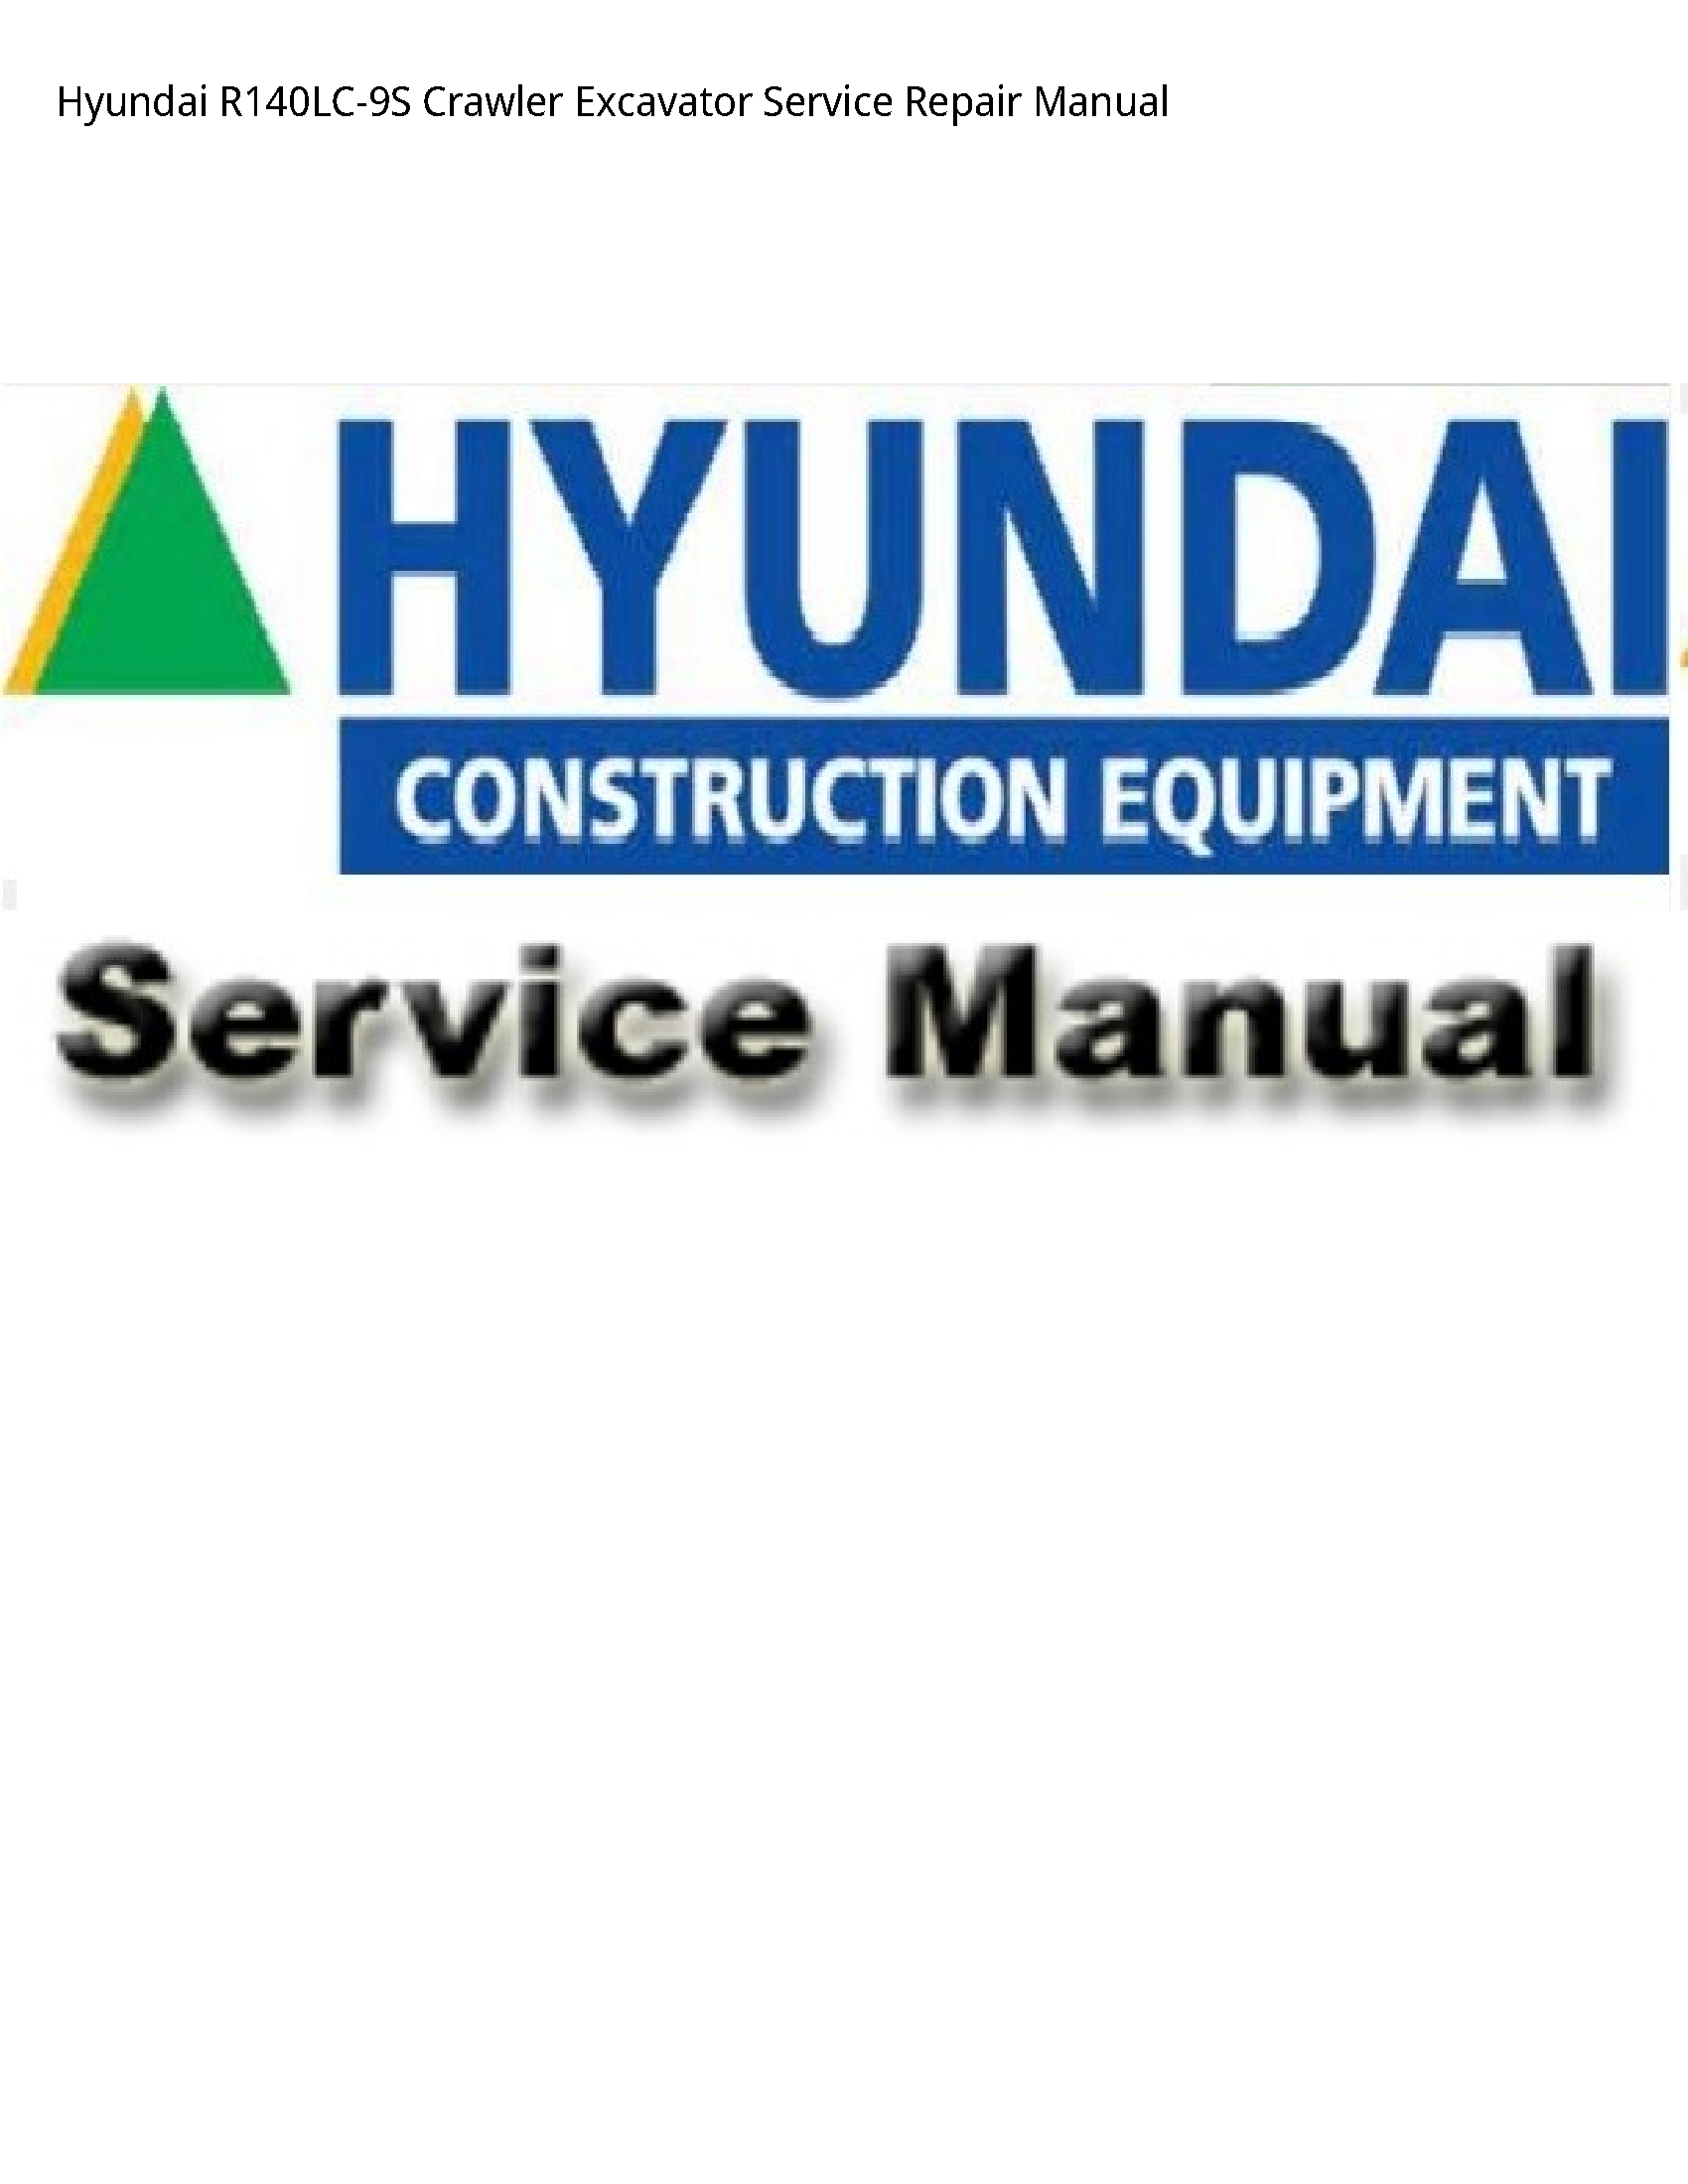 Hyundai R140LC-9S Crawler Excavator manual